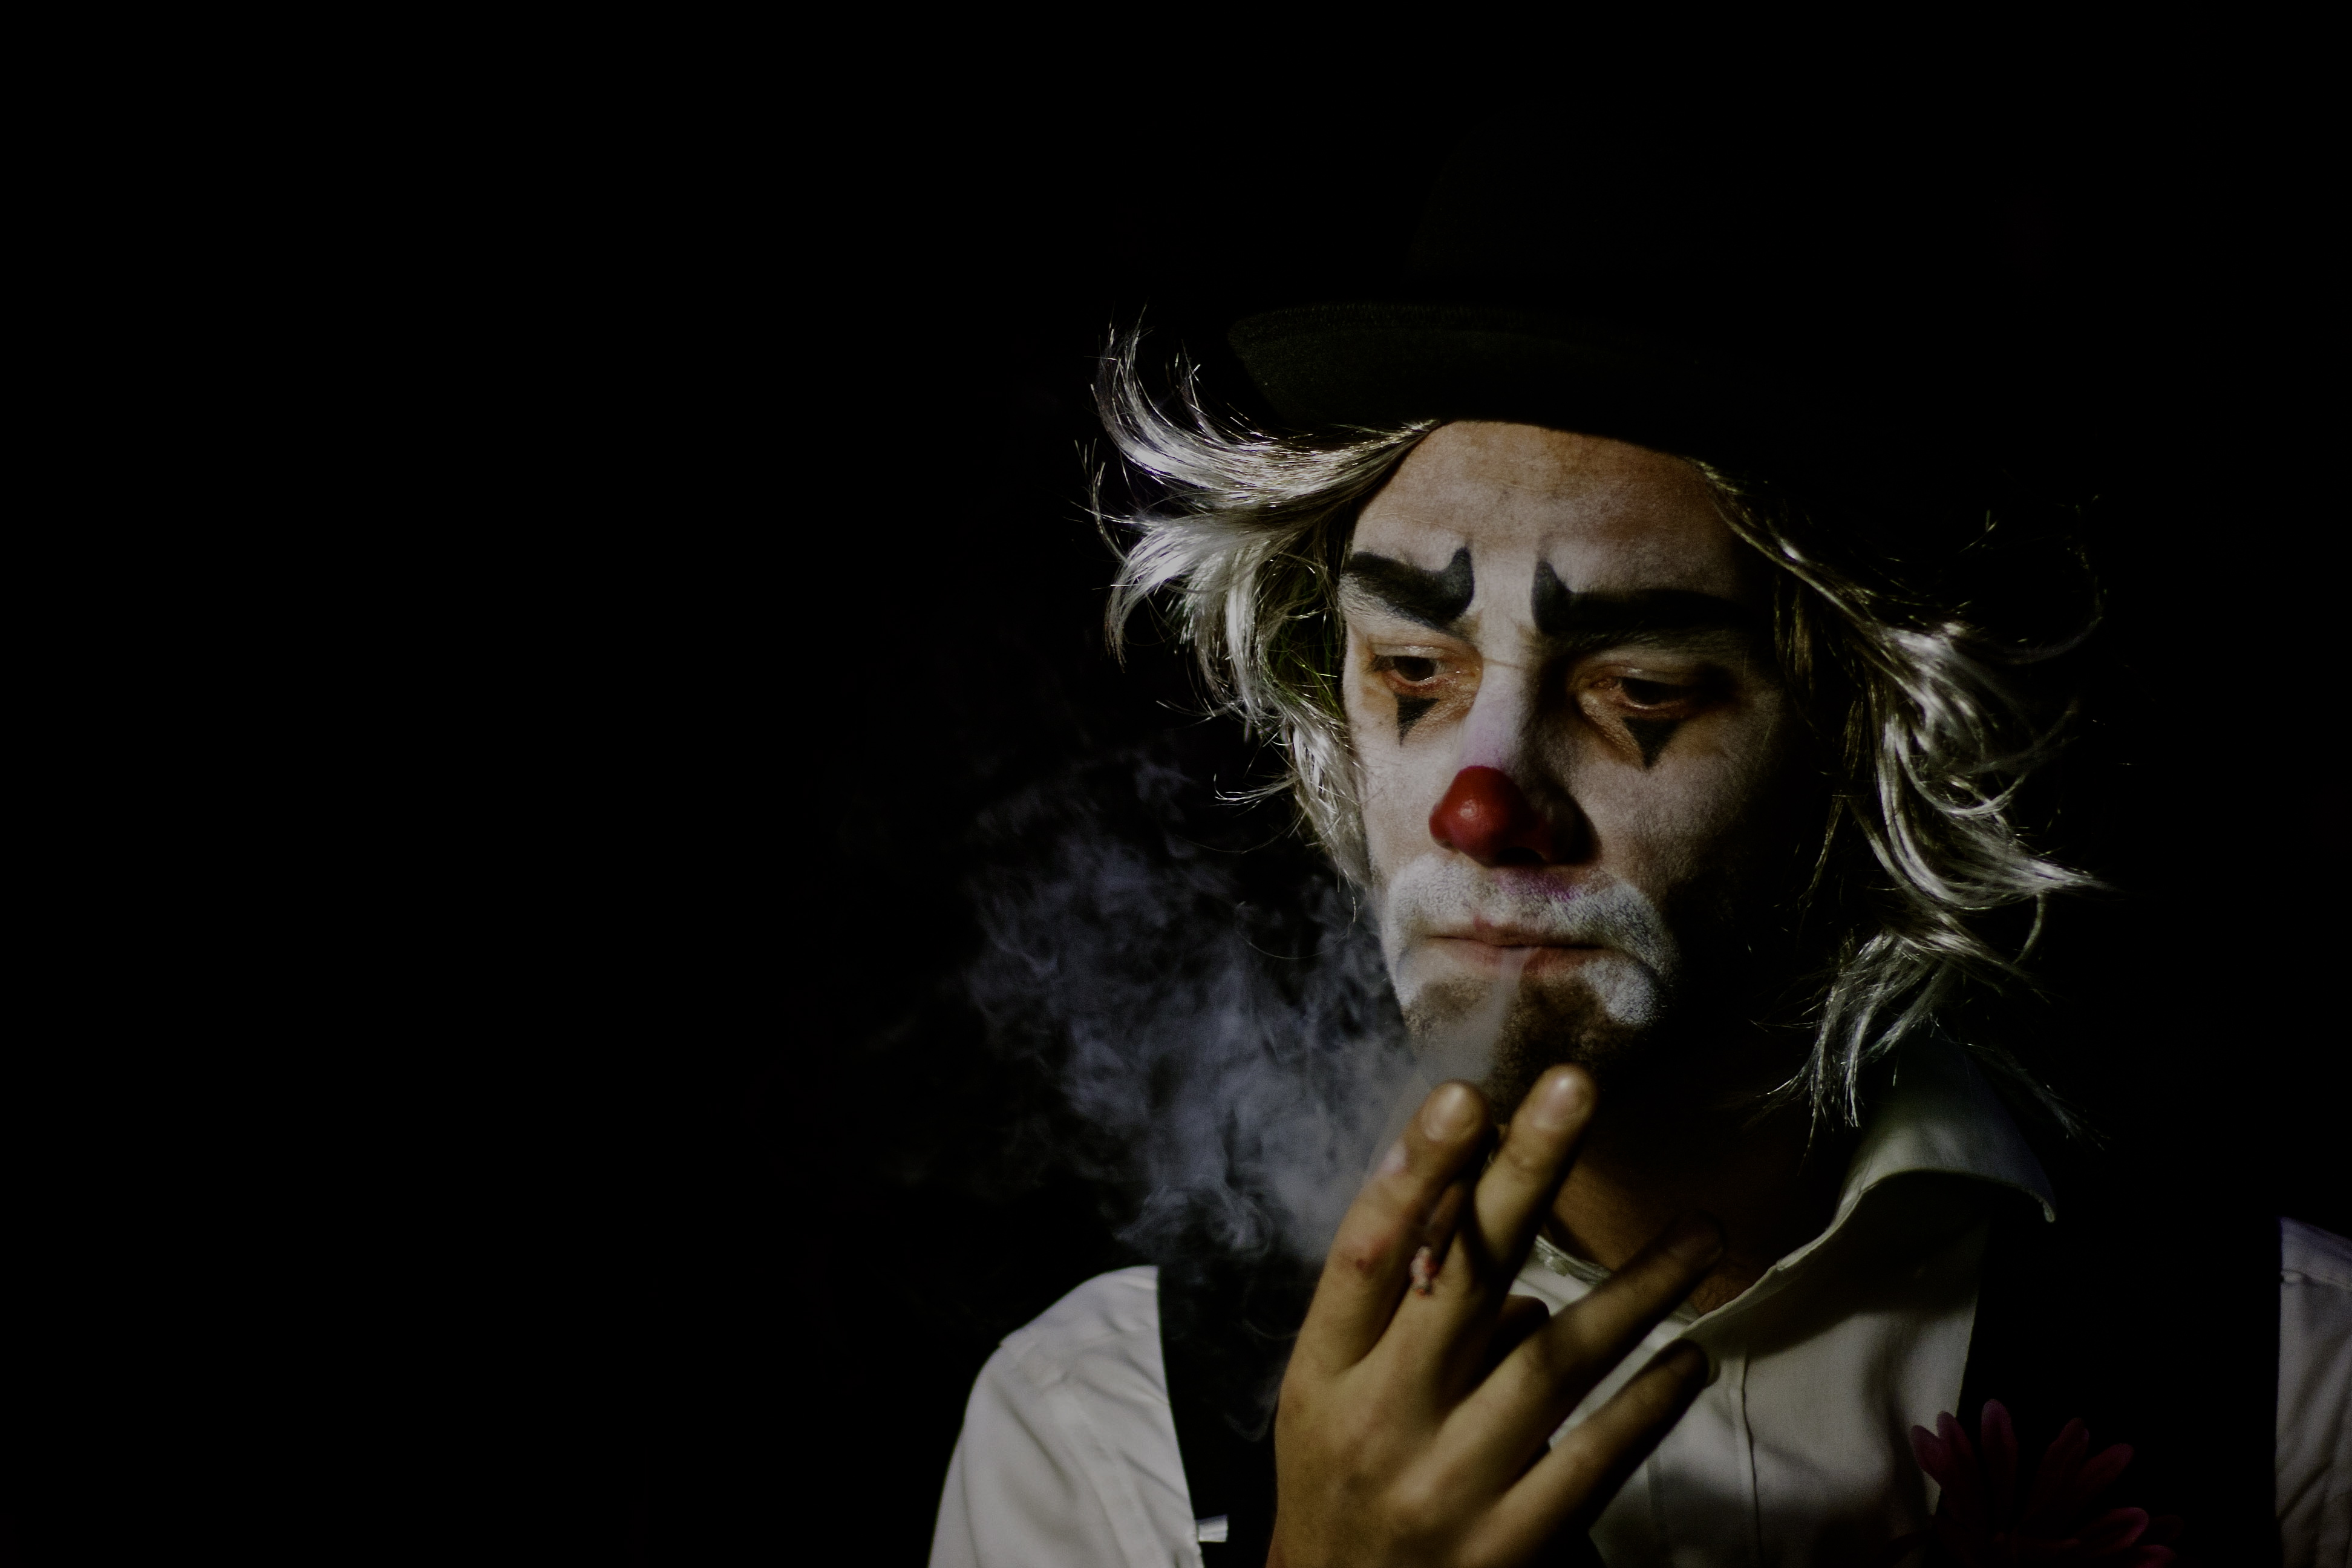 Smokey the Clown